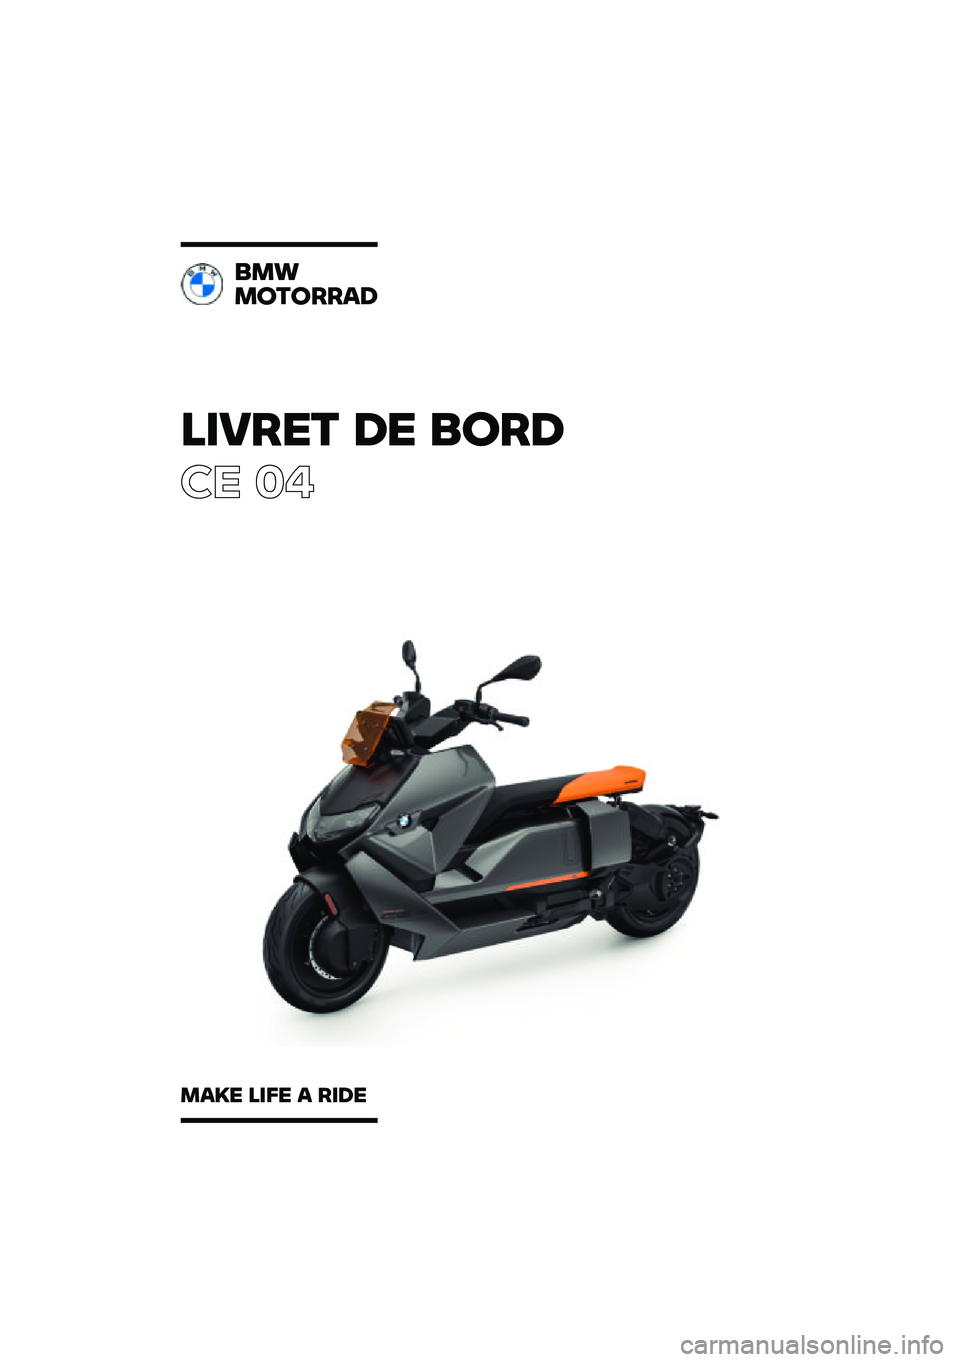 BMW MOTORRAD CE 04 2021  Livret de bord (in French) ������ �\b� �	�
��\b
�� ��
�	��\f
��
��
���
�\b
��
�� ���� �
 ���\b� 